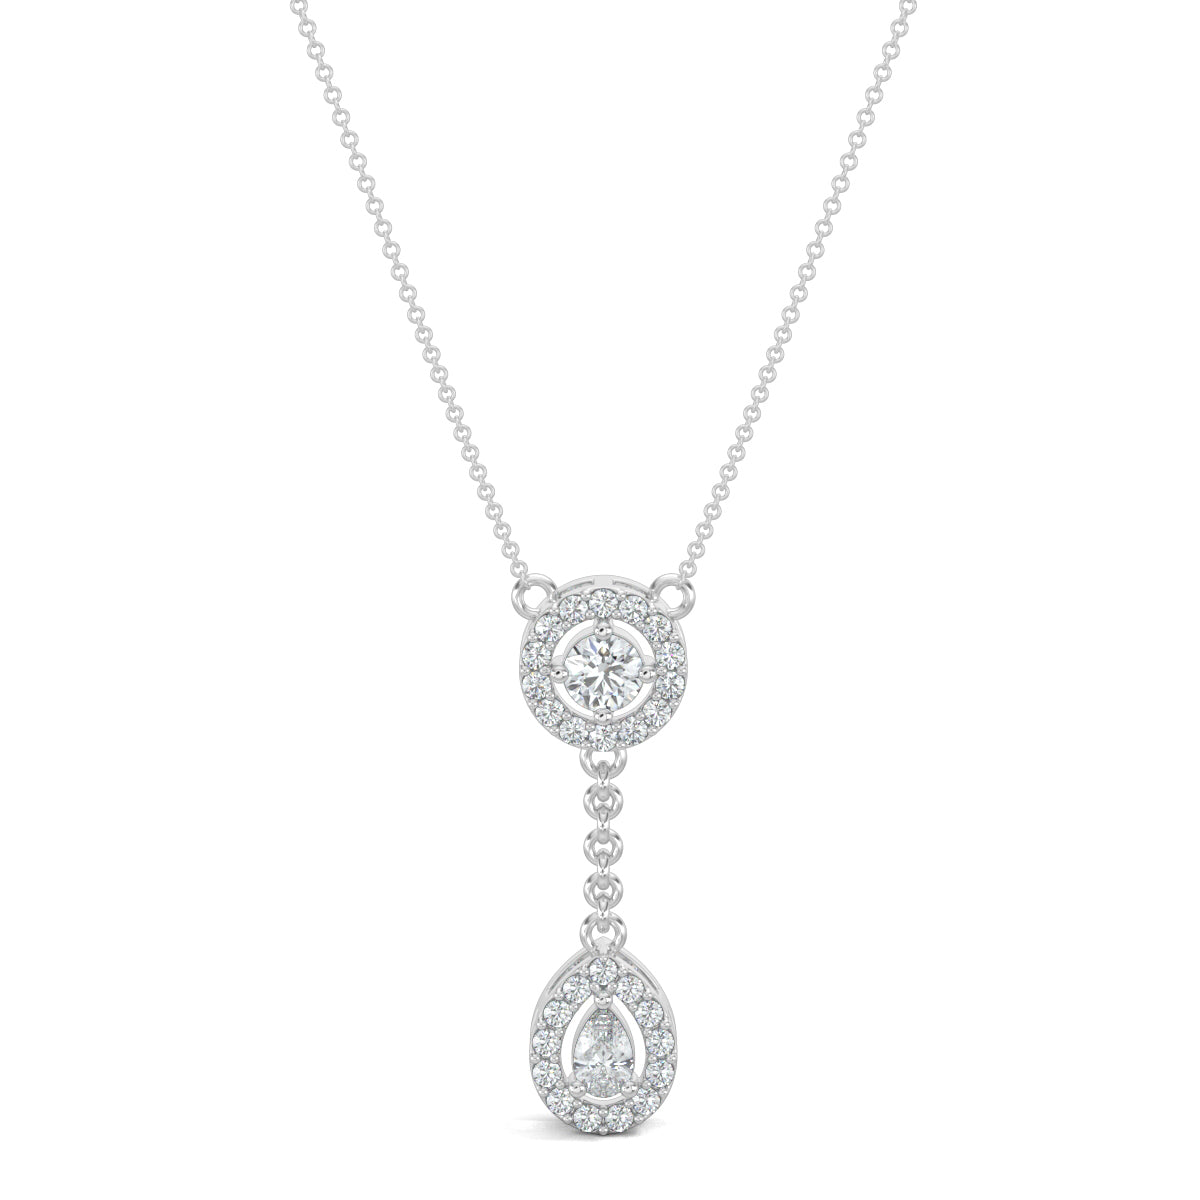 White Gold, Diamond Pendants, Natural diamond pendant, Lab-grown diamond pendant, casual pendant, id length pendant, circular border, round diamond, halo setting, drop-shaped border, pear diamond, delicate chain, elegant pendant.